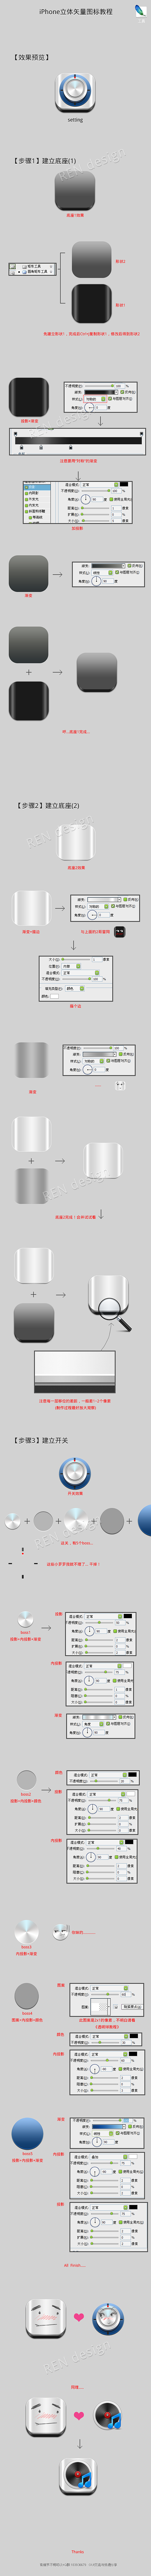 iPhone立体图标 - UI/网页设计